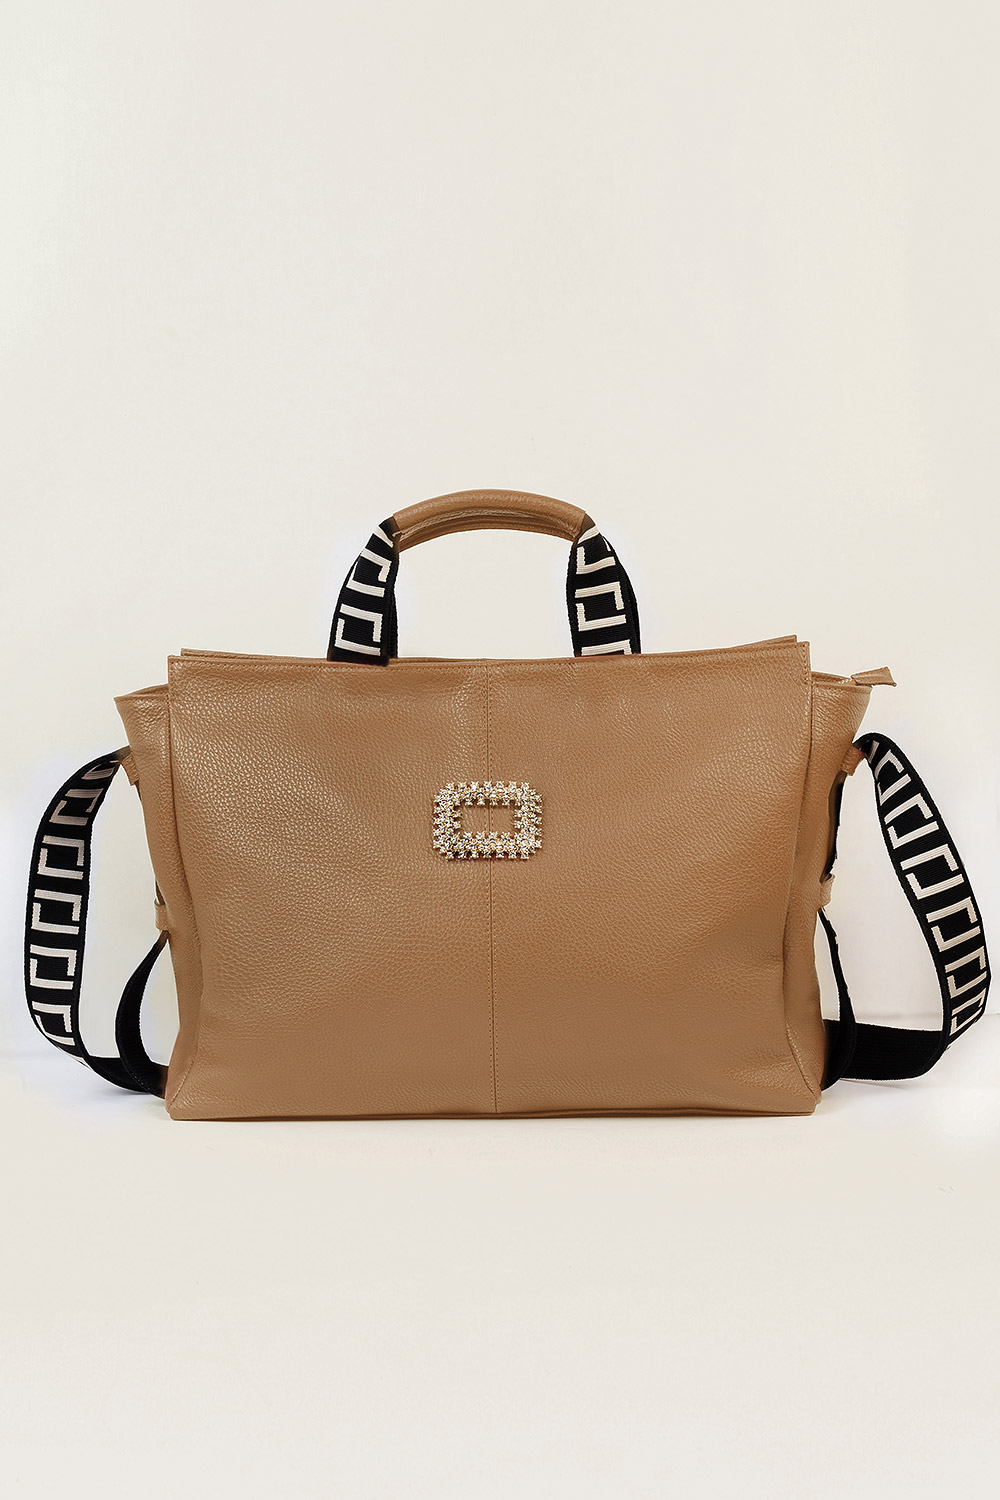 FERGIE Leather Bag Tan